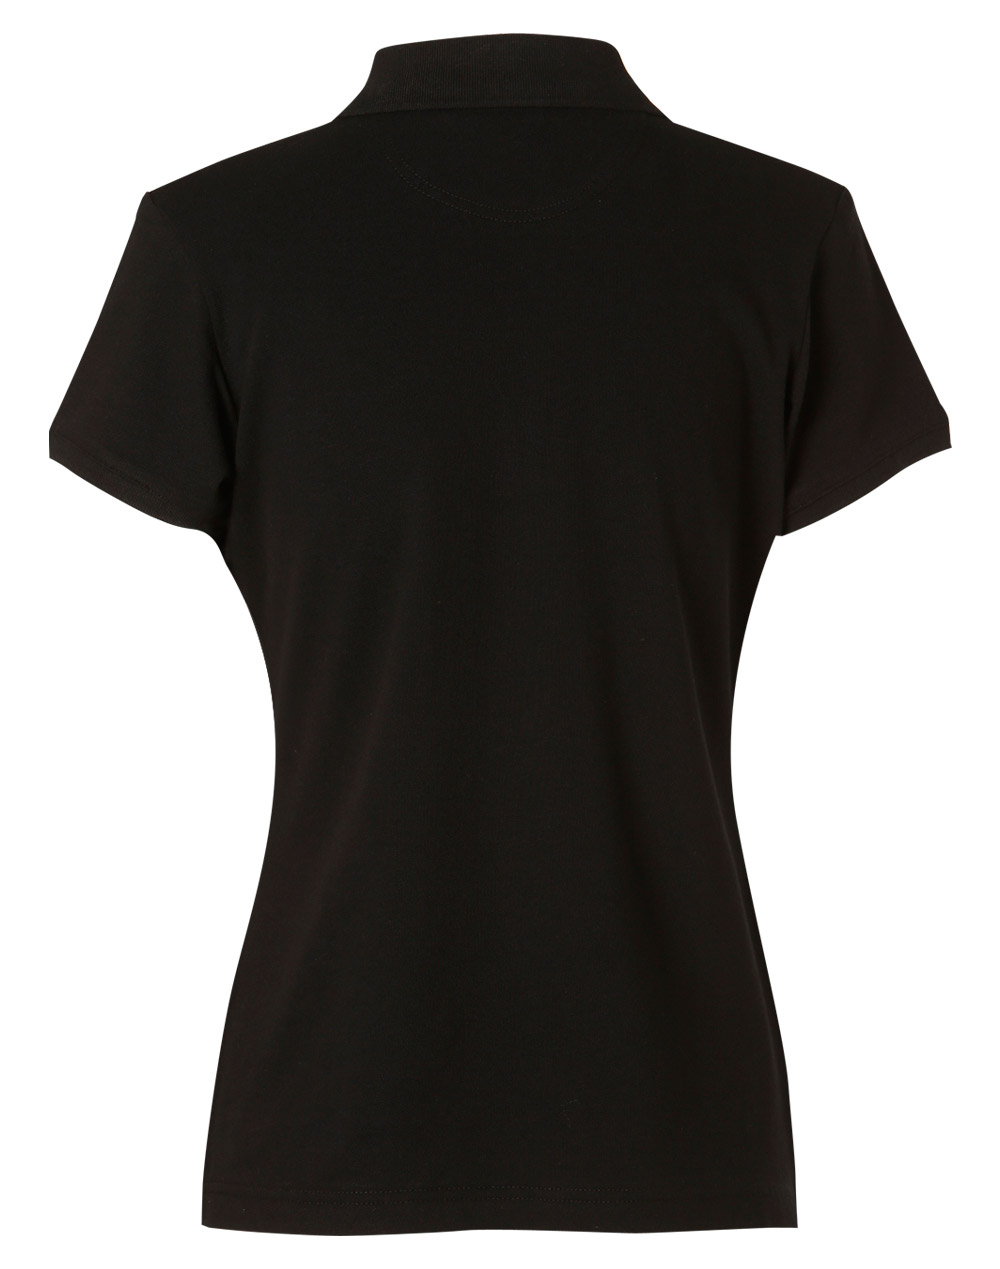 Custom Cotton (Black) Long Beach Ledies Polo Shirts Online Perth Australia